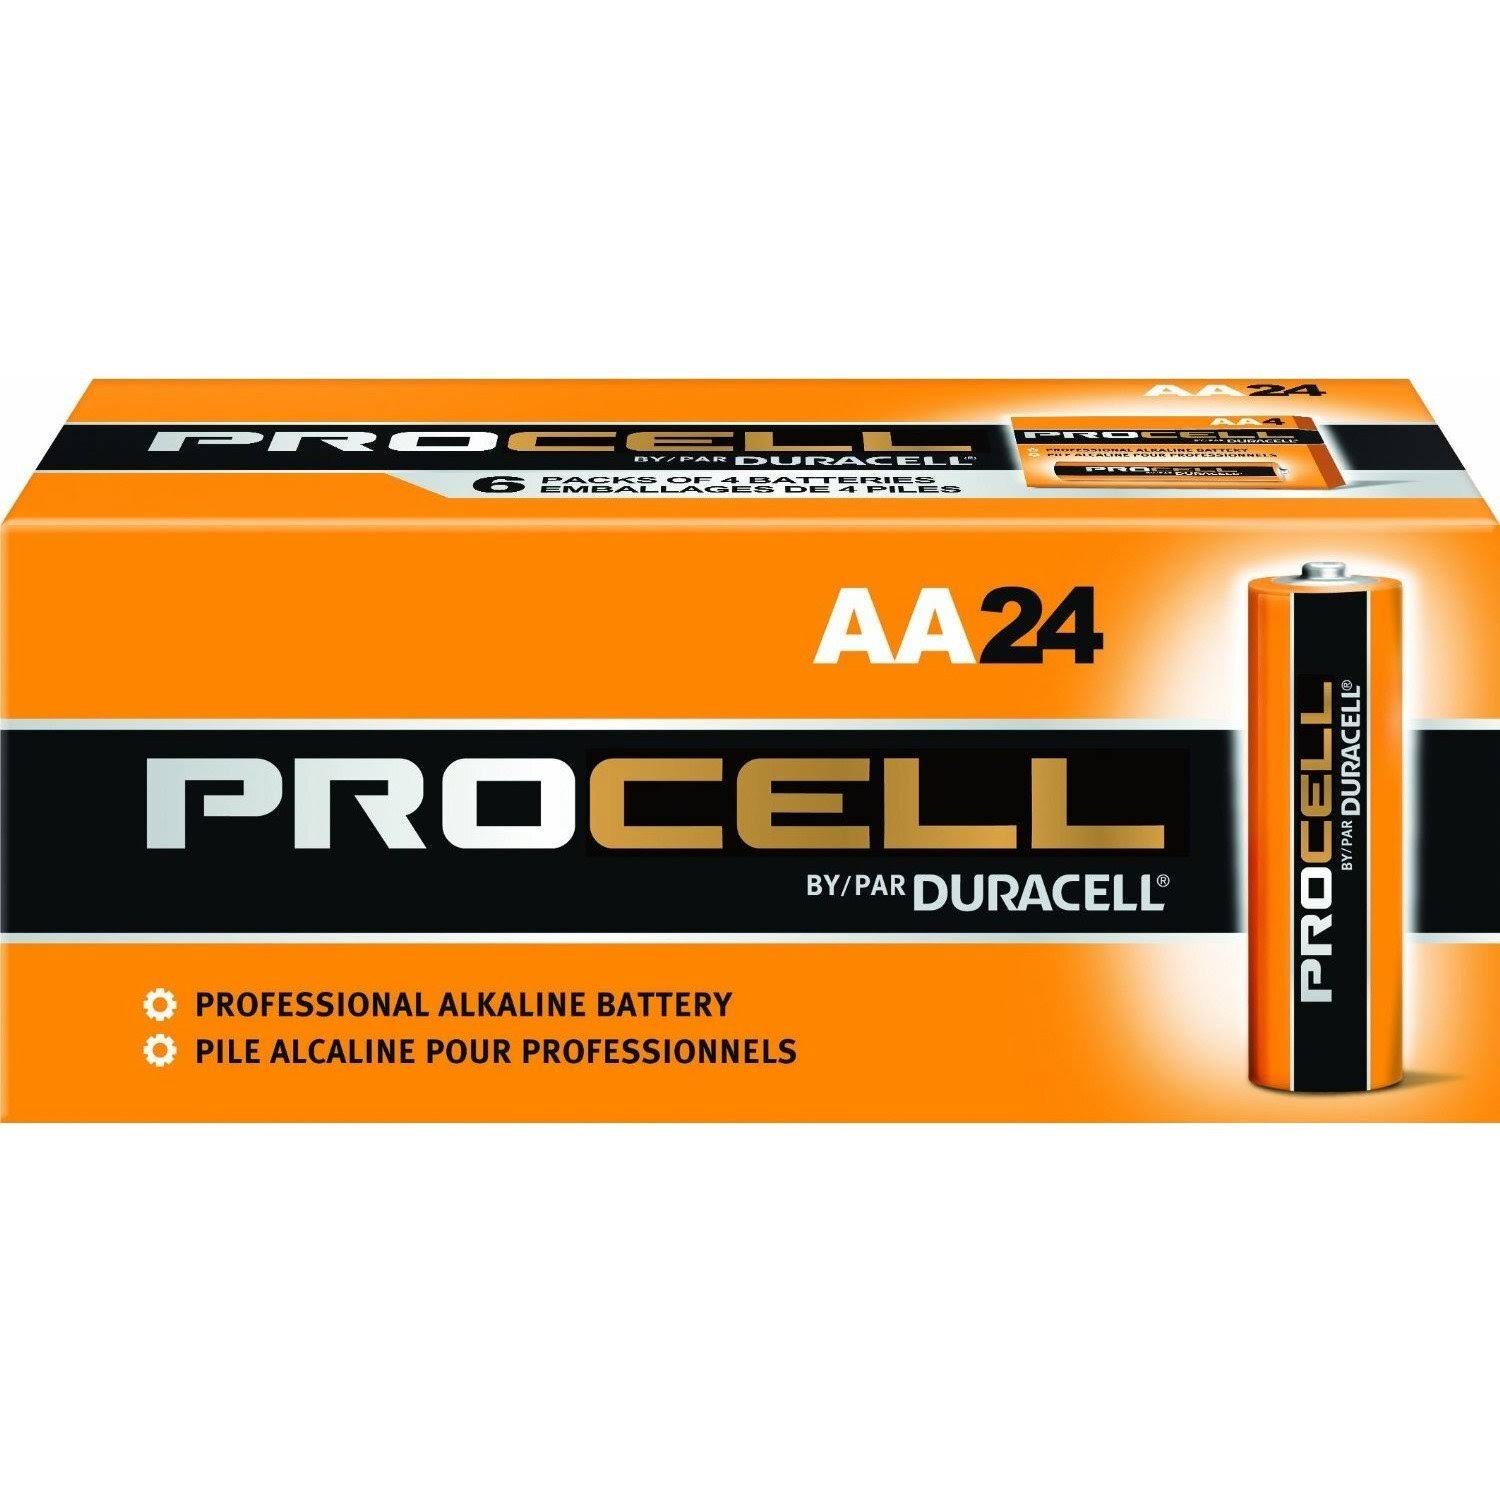 Duracell Procell Alkaline Battery - AA, 24pk